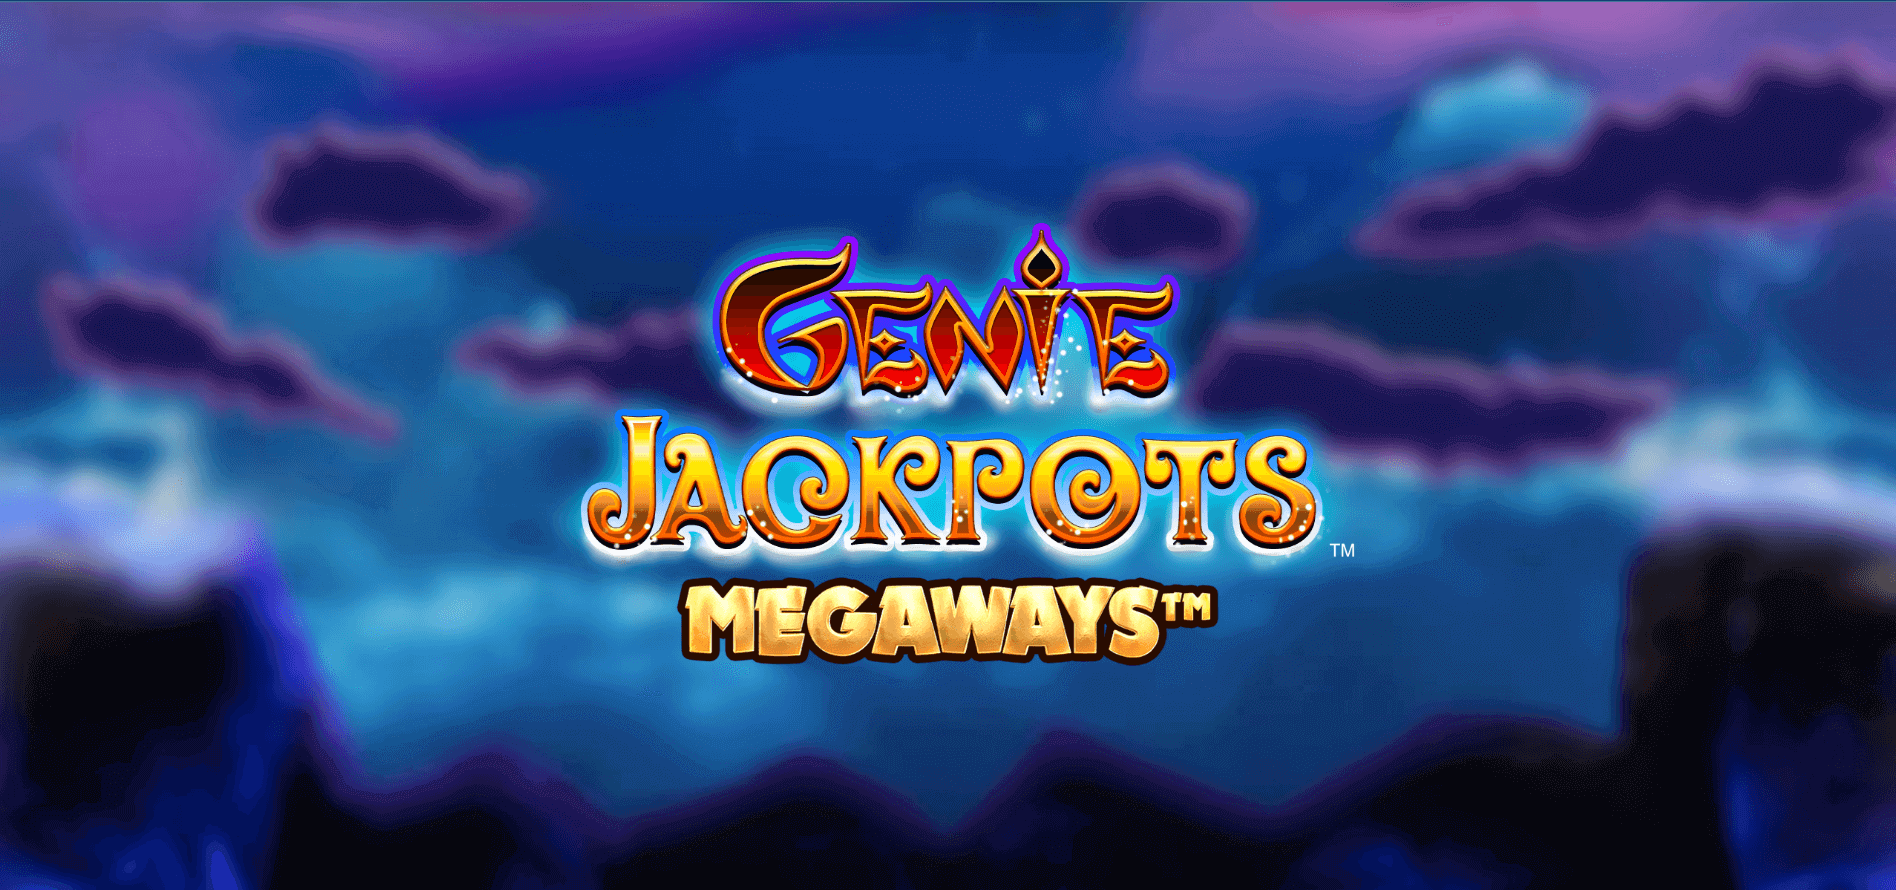 Genie Jackpots Megaways slot game IndiaCasinos